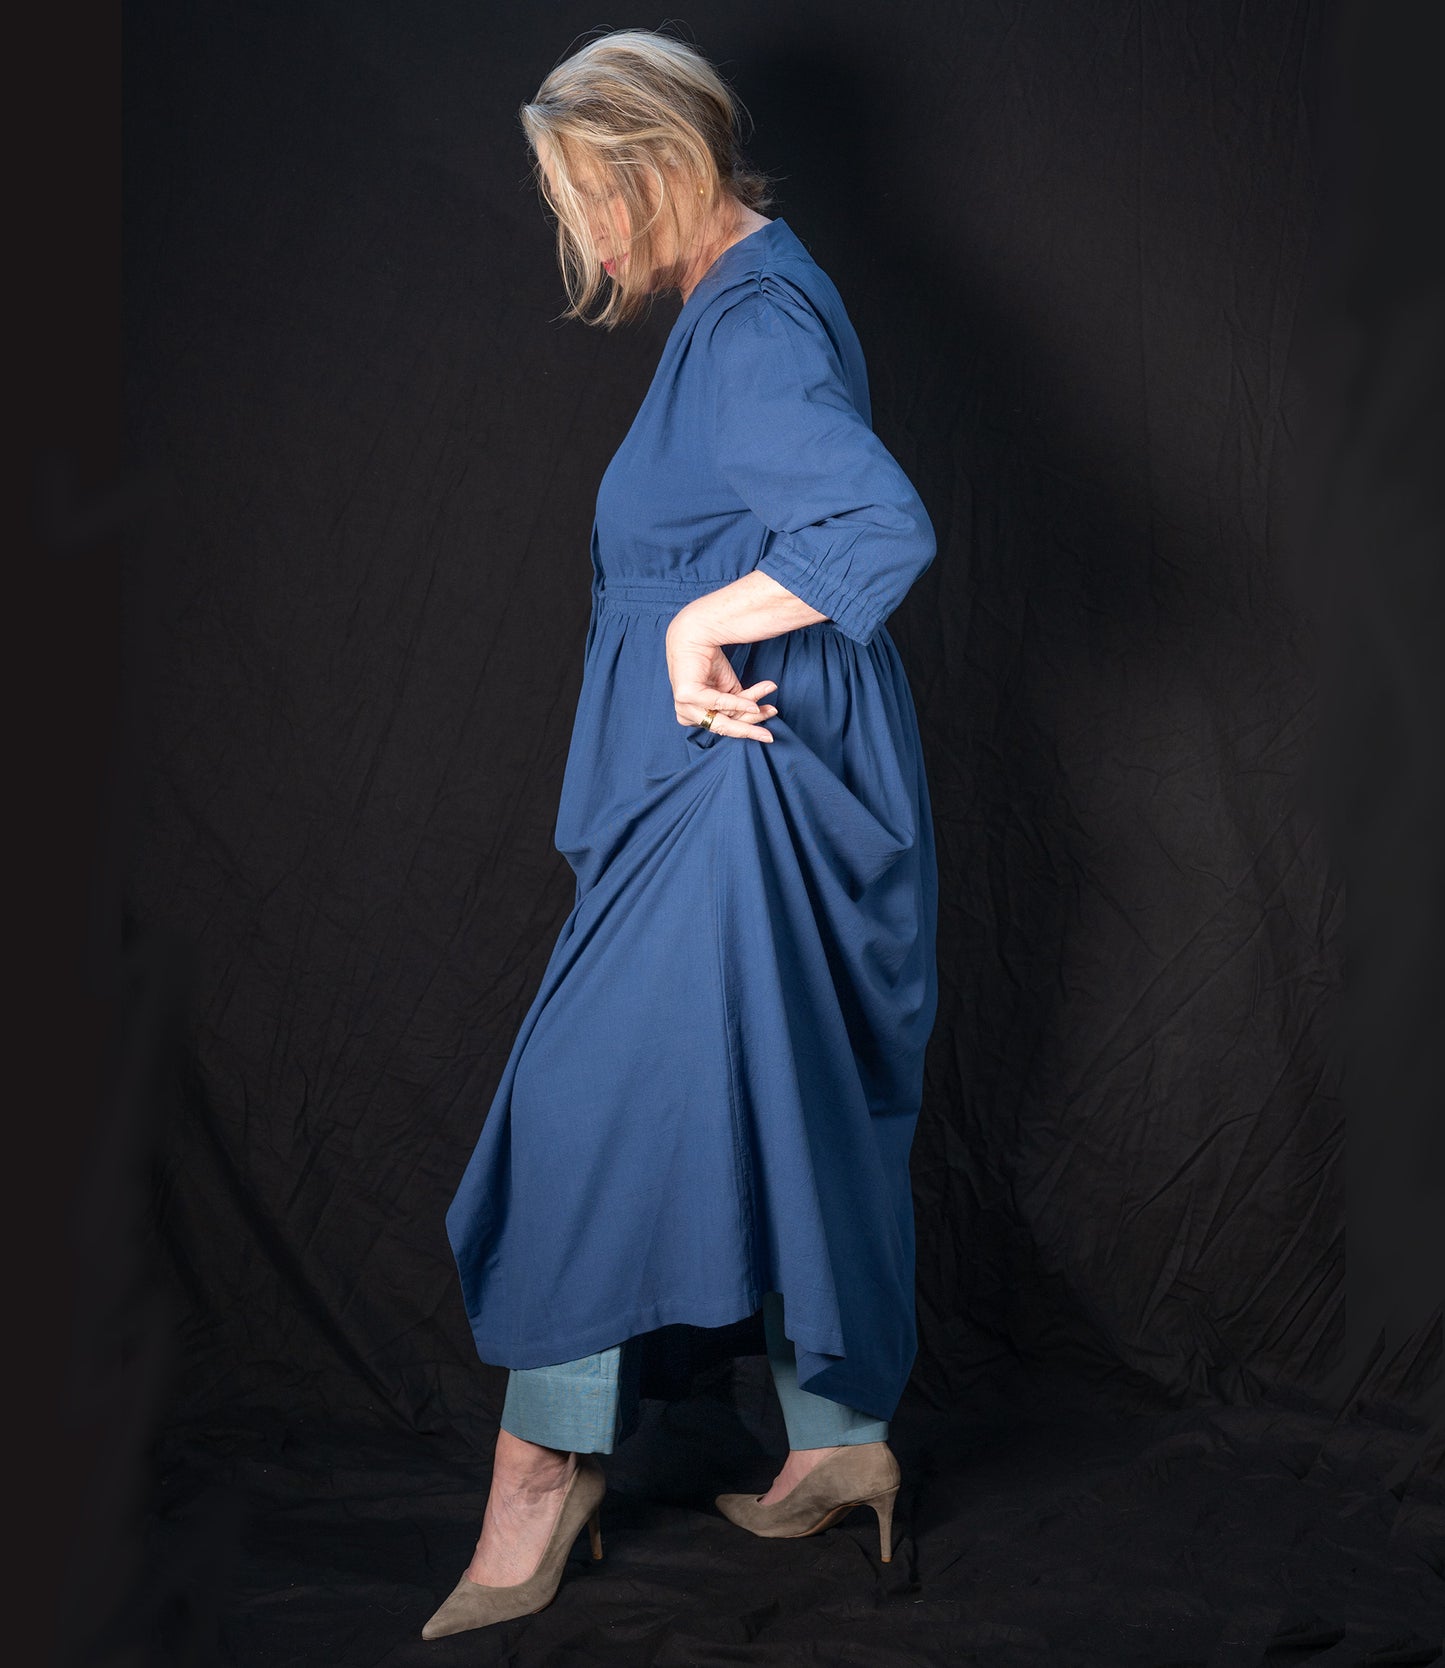 Dress of organic cotton dyed in dazzling indigo